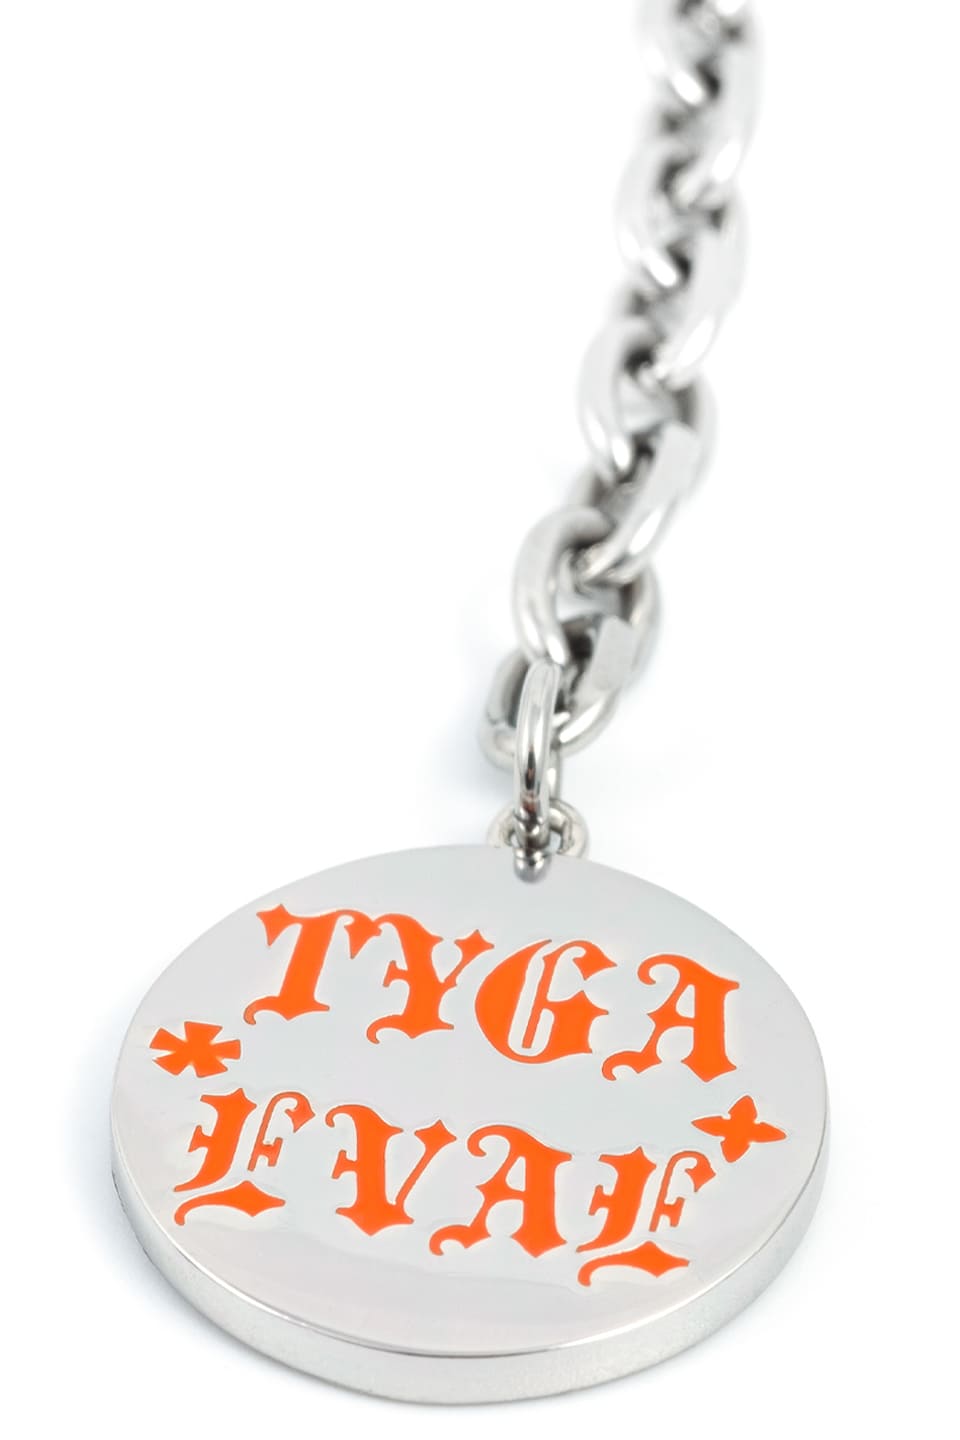 Tyga Collaboration Necklace